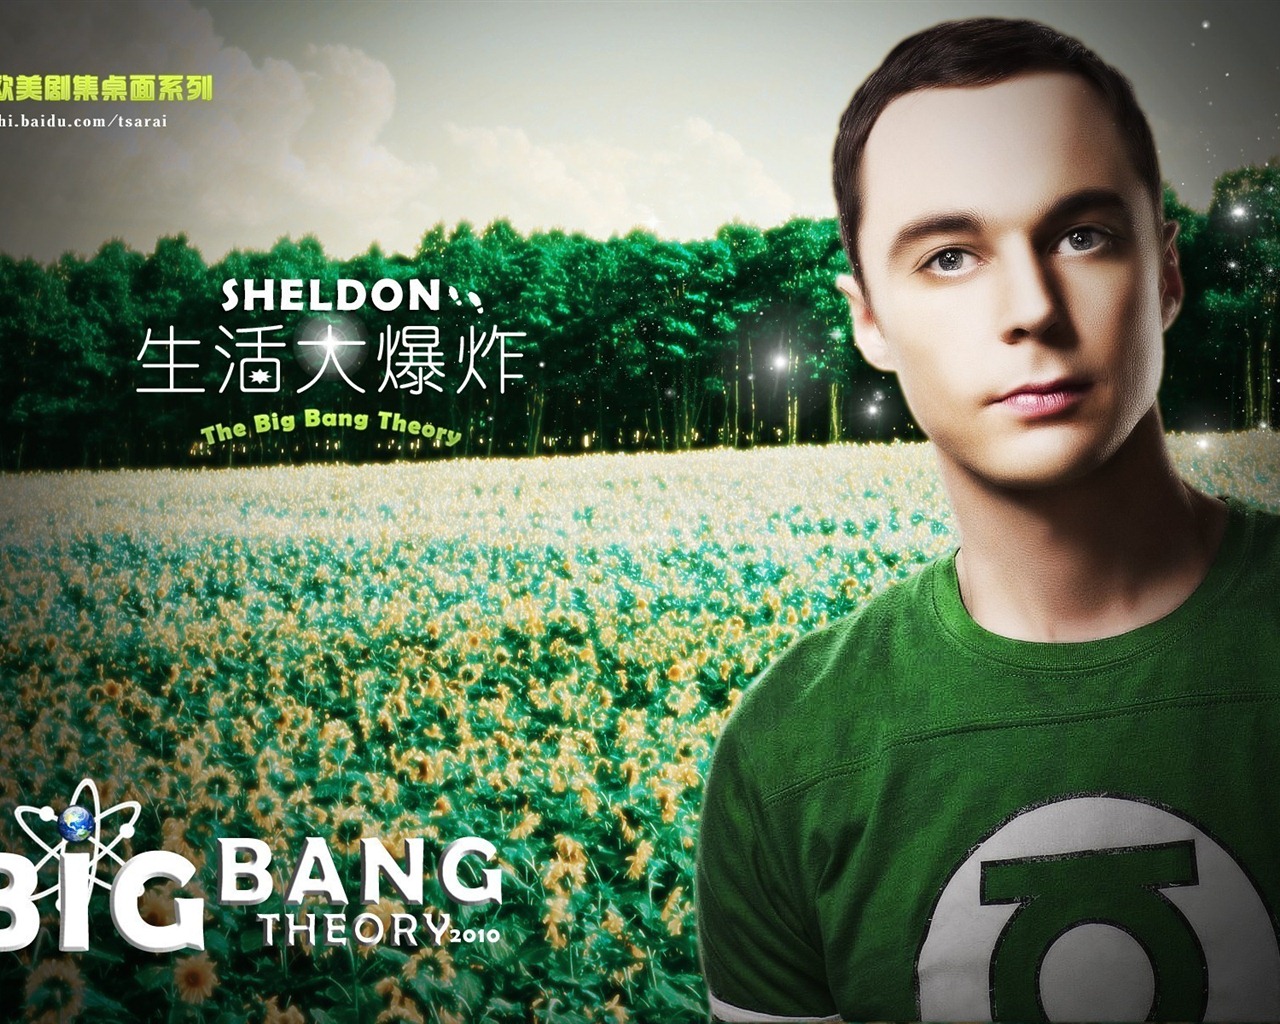 The Big Bang Theory ビッグバン理論TVシリーズHDの壁紙 #16 - 1280x1024